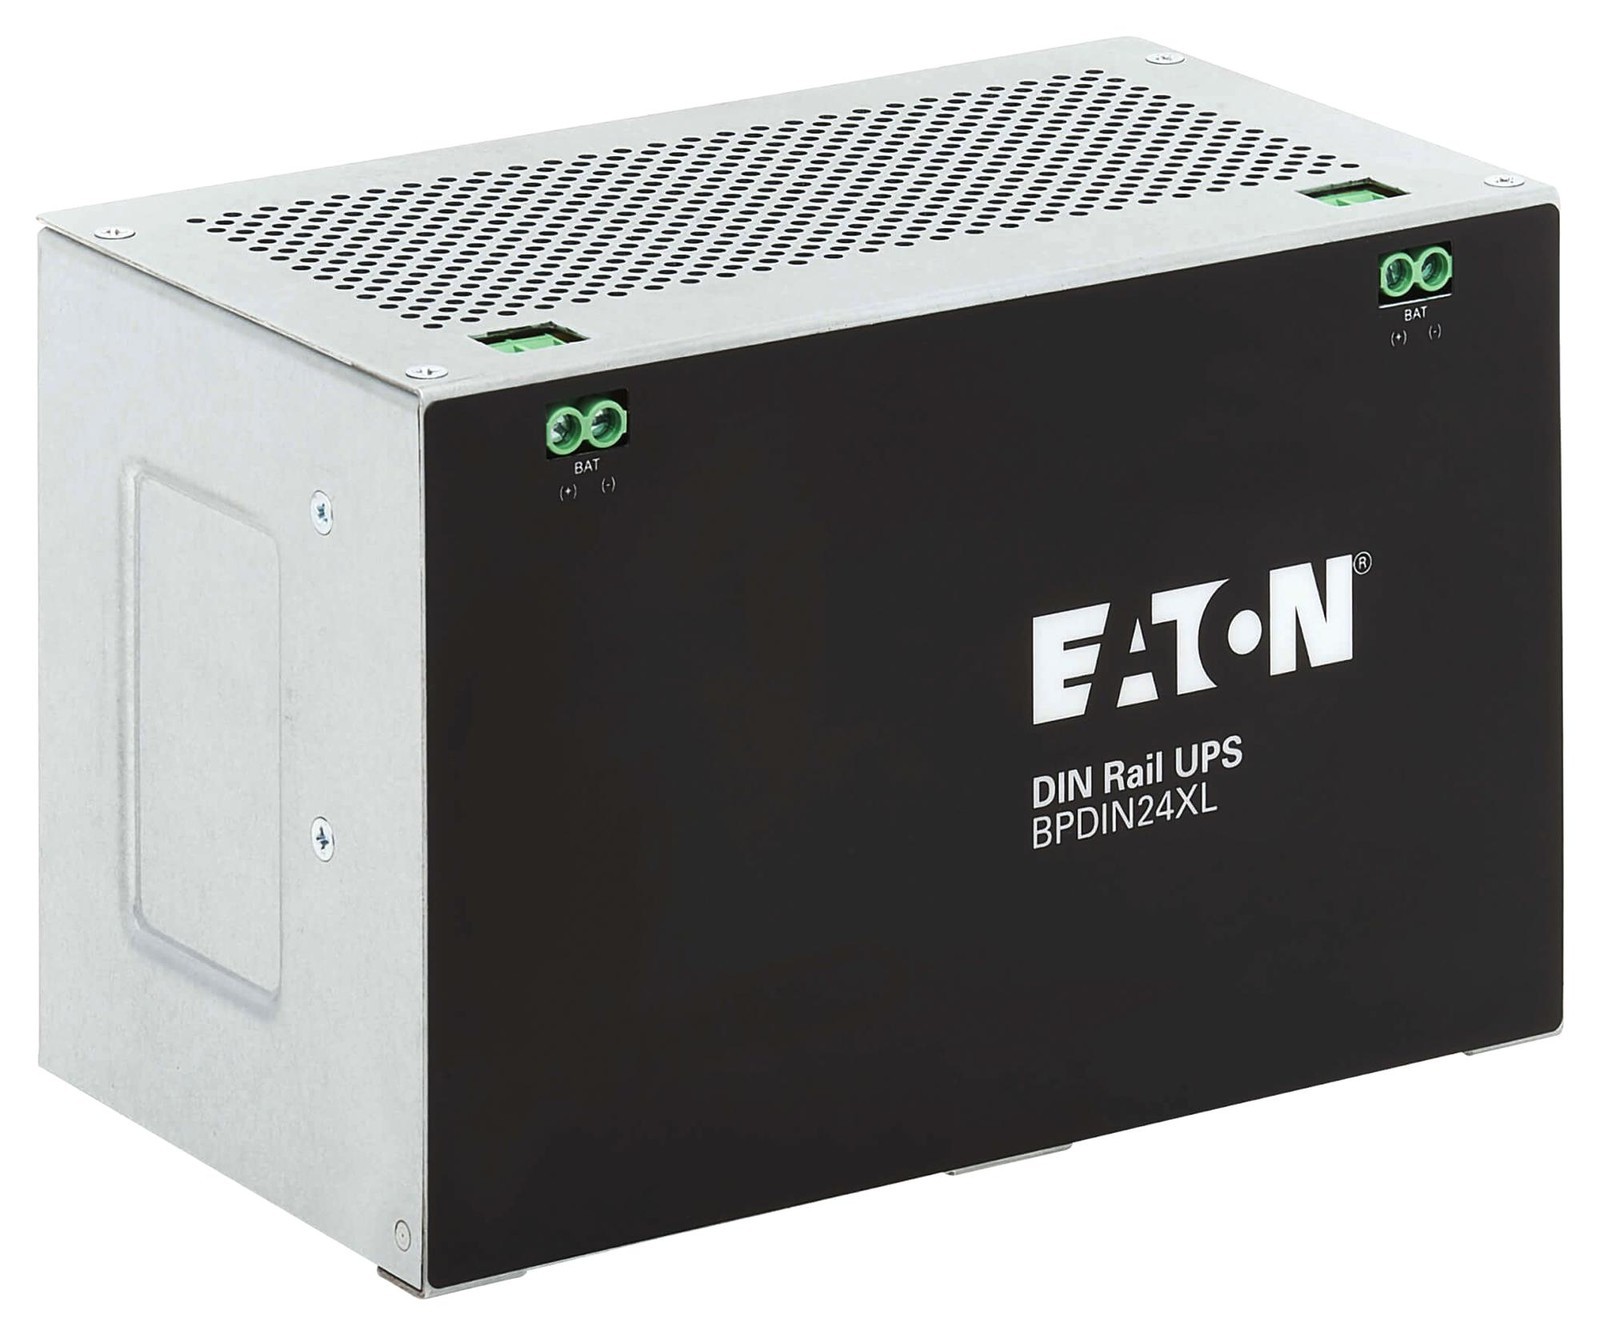 Eaton Tripp Lite Bpdin24Xl Battery Module, Din Rail Ups Model